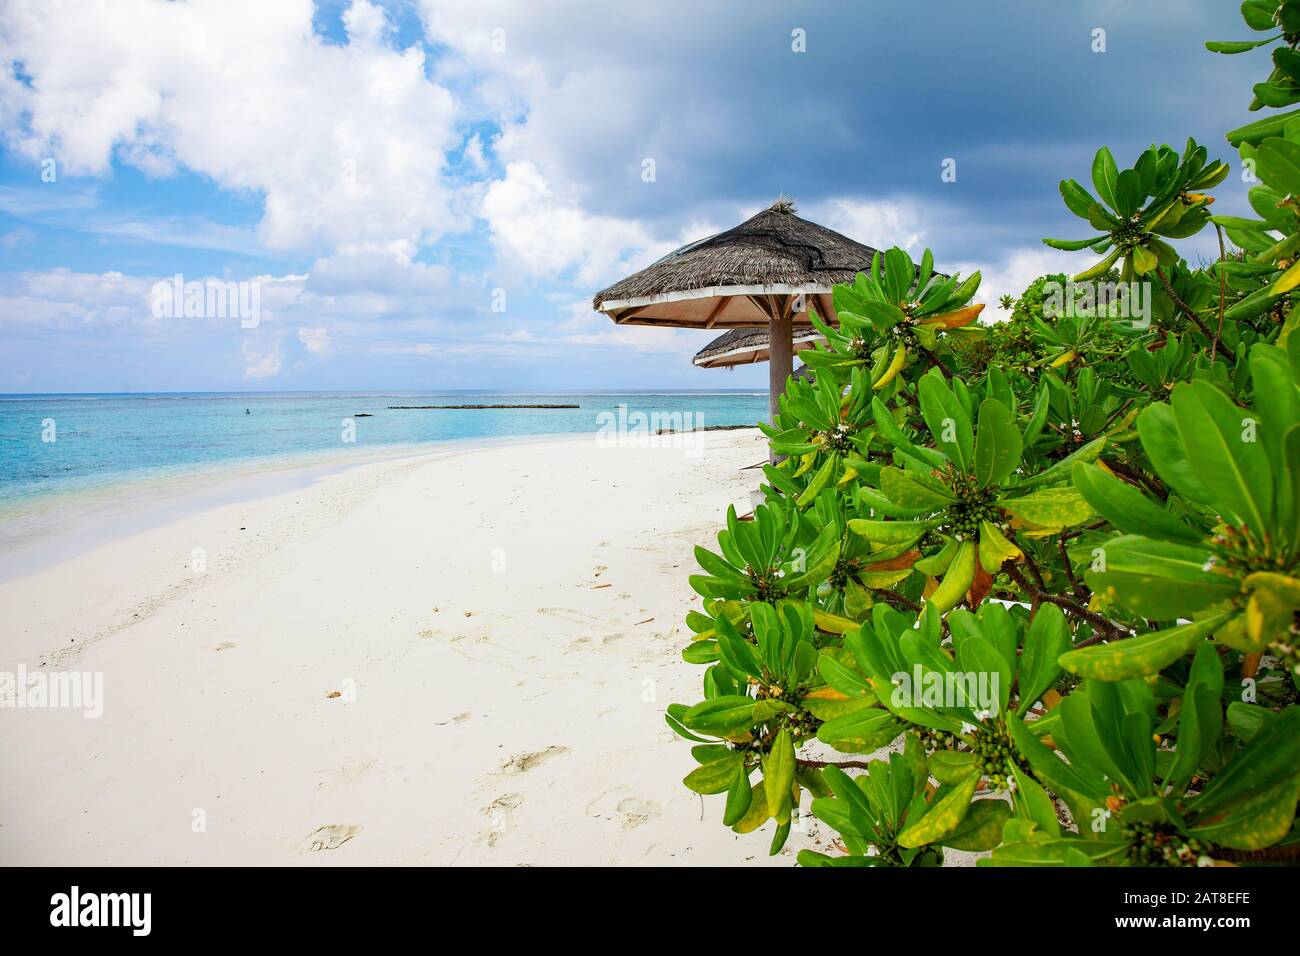 Romantica isola tropicale esotica natura oceano lansccape Foto Stock